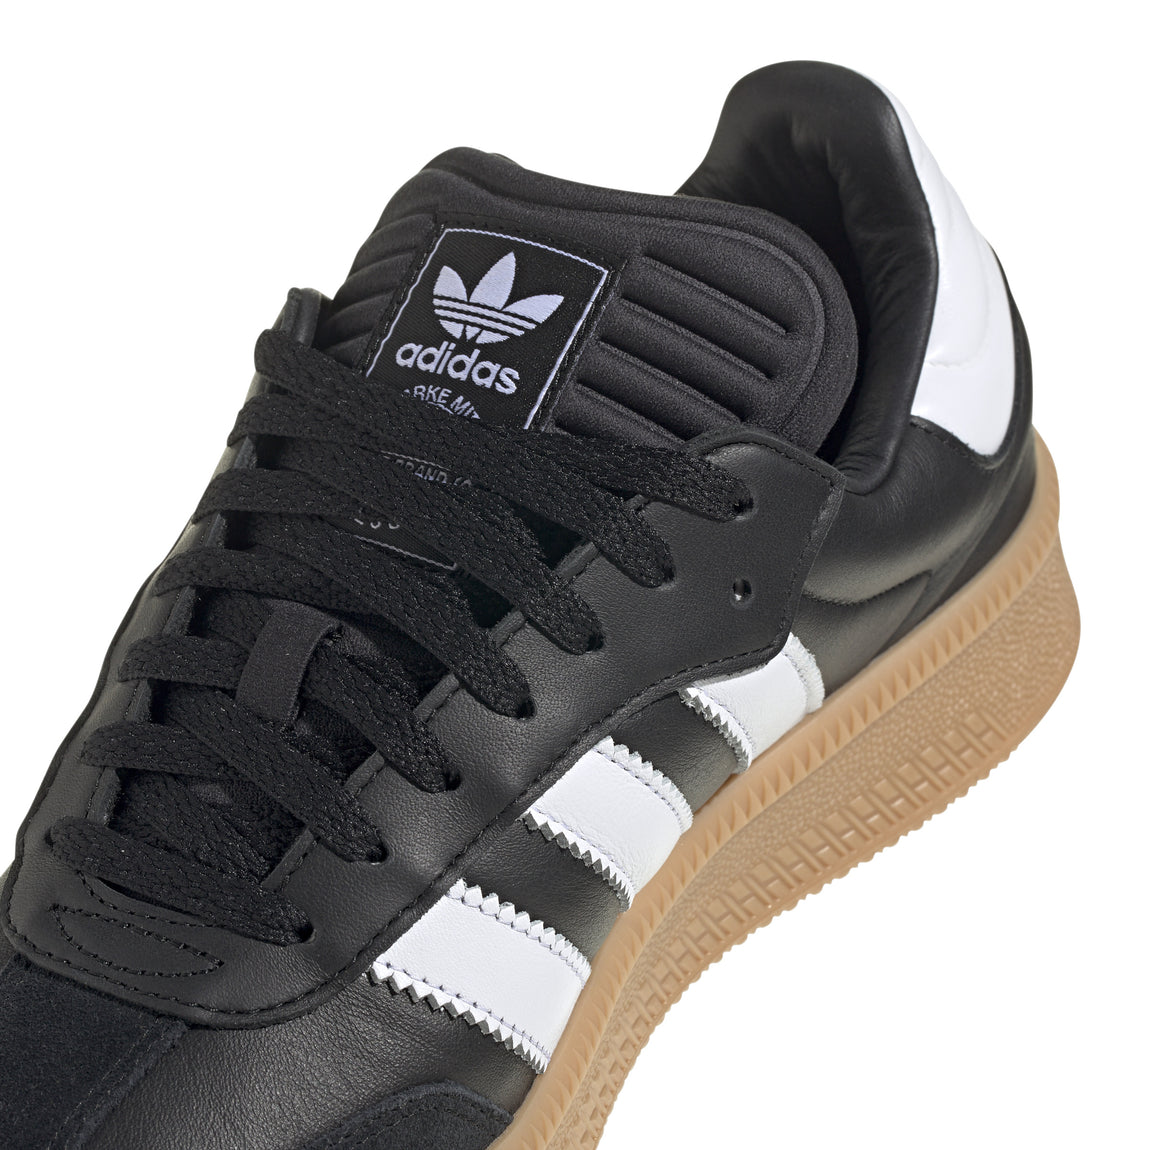 Adidas Samba XLG (Core Black/Footwear White/Gum3) - Adidas Samba XLG (Core Black/Footwear White/Gum3) - 